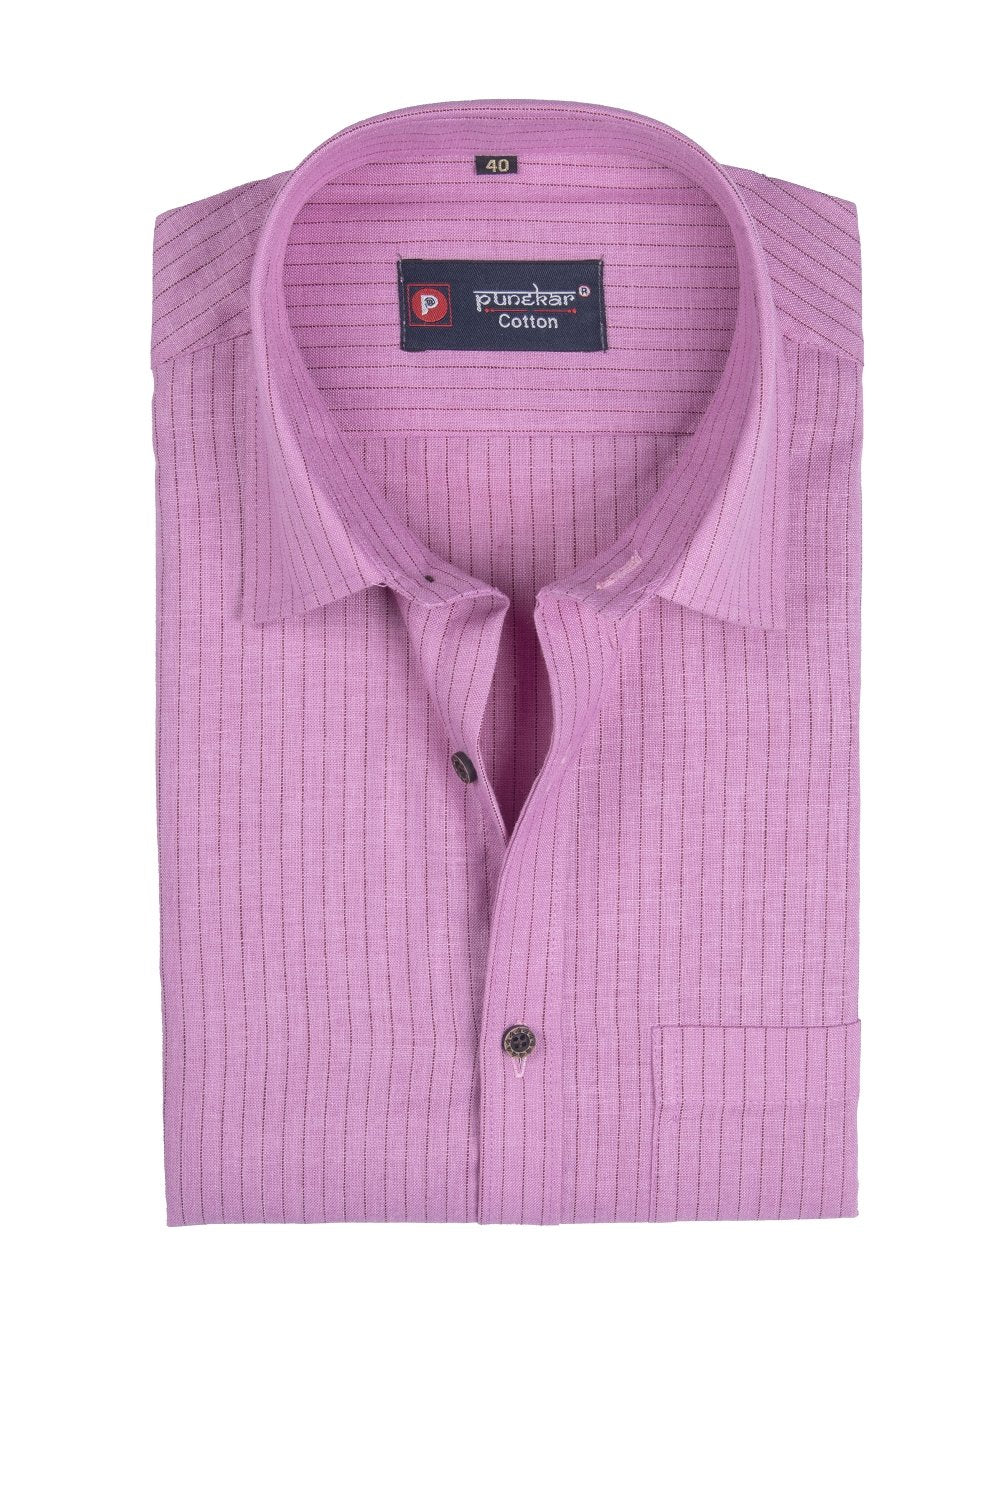 Punekar Cotton Pink Color Linning Criss Cross Woven Cotton Shirt for Men's. - Punekar Cotton